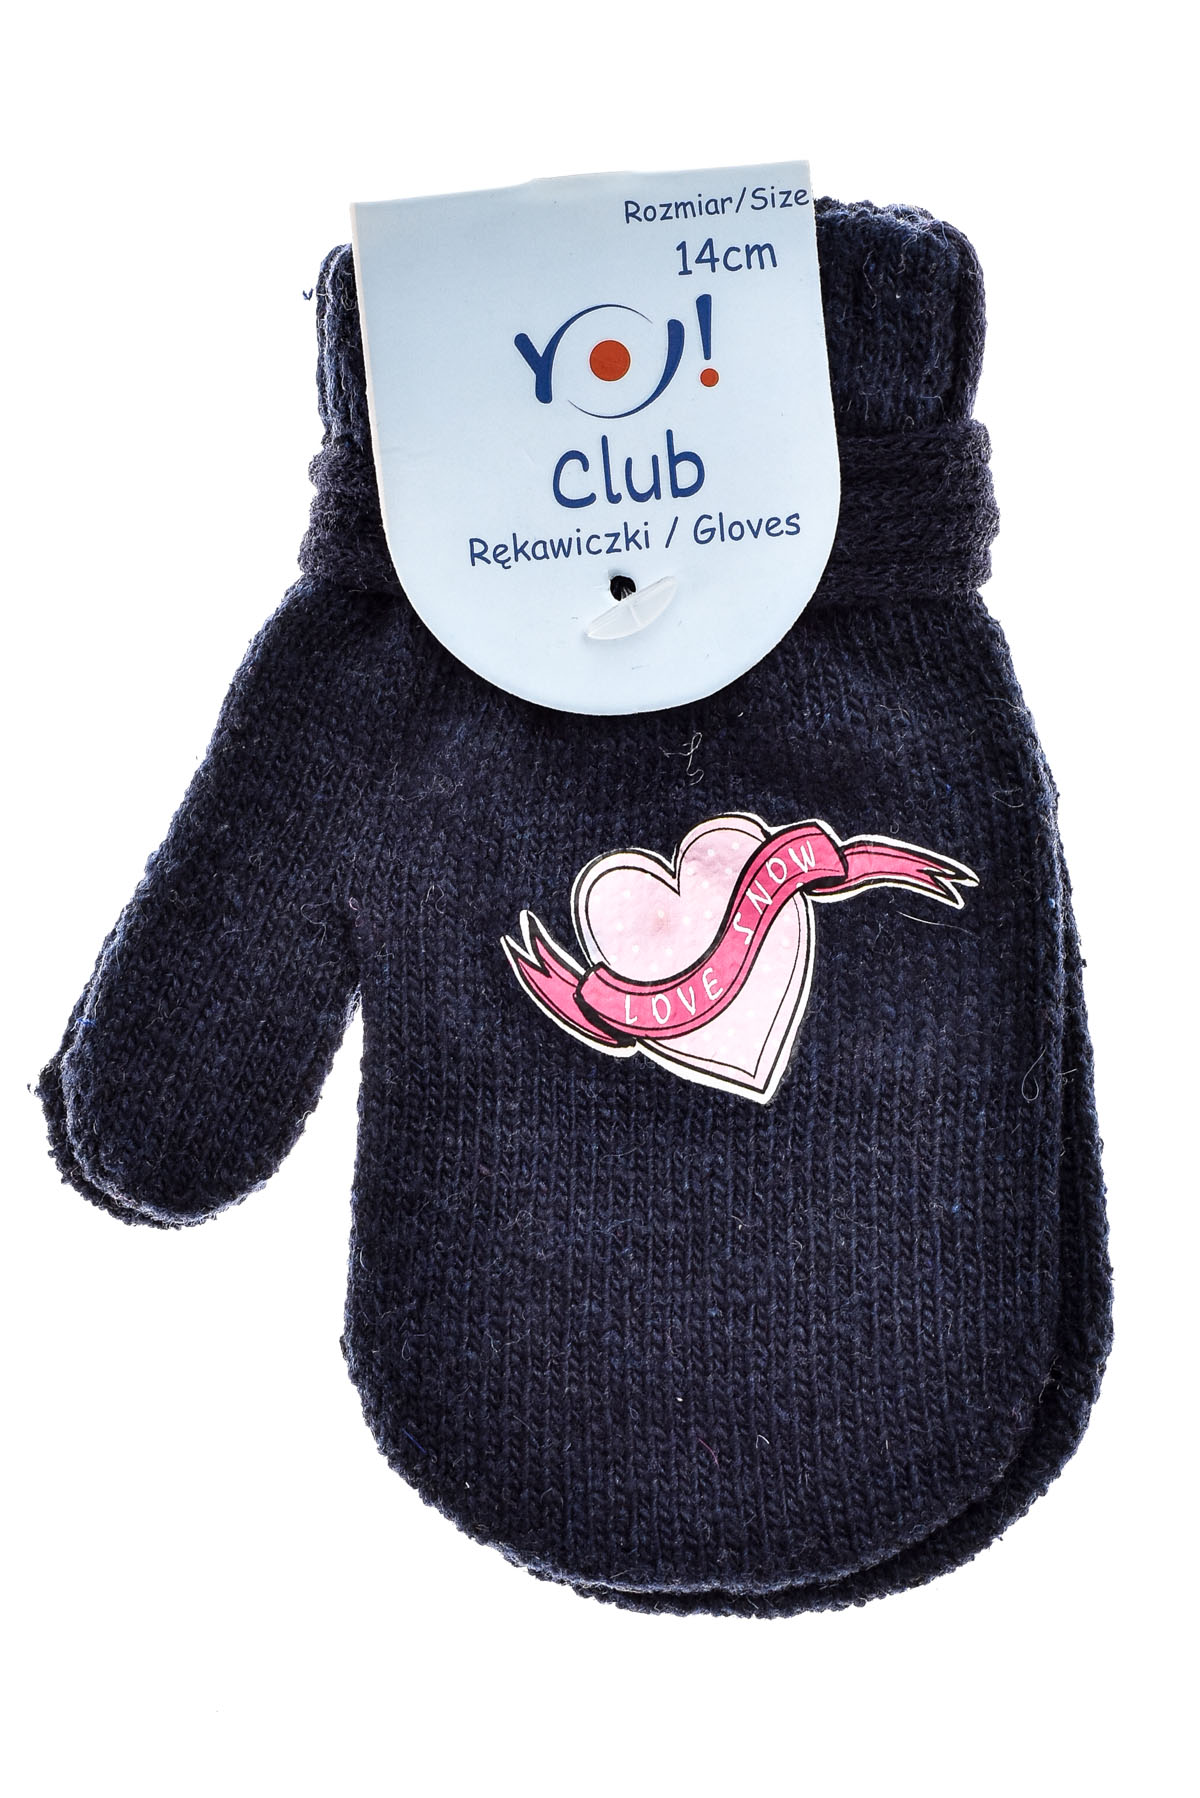 Girls' Gloves - Yo! club - 0